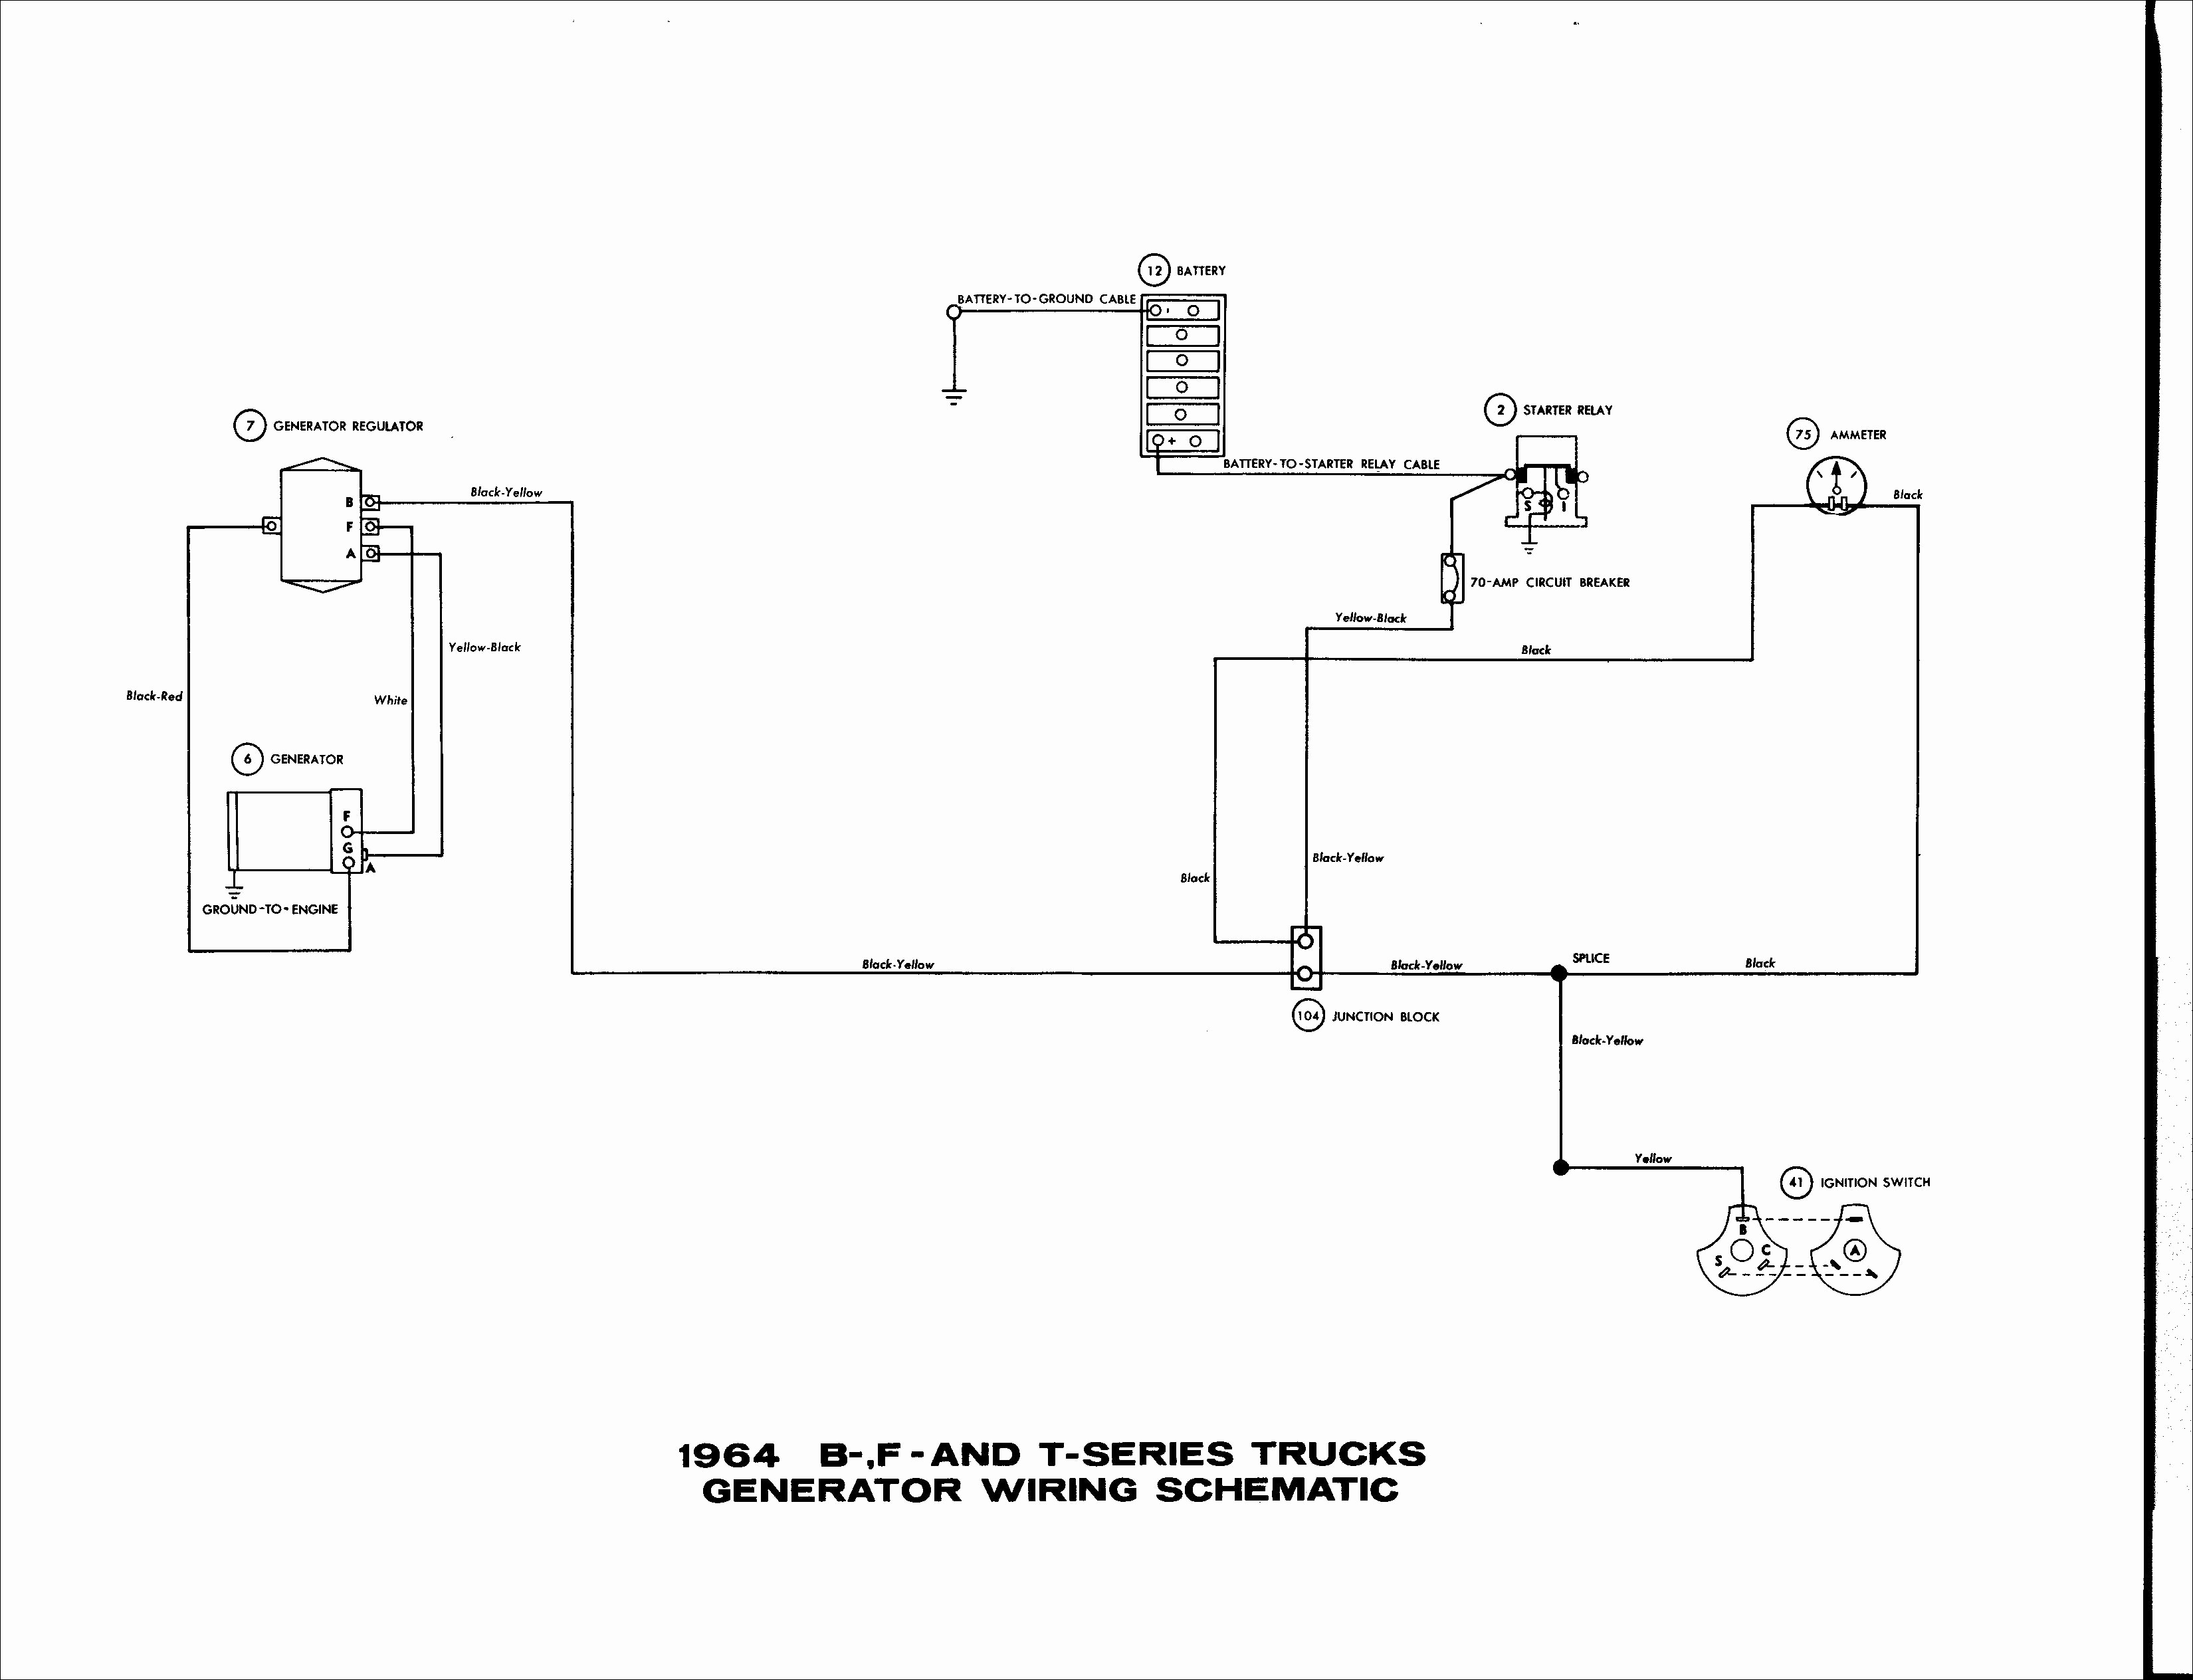 Motorola Alternator Wiring Diagram Luxury Holden Alternator Wiring Diagram Diy Wiring Diagrams • Motorola Alternator